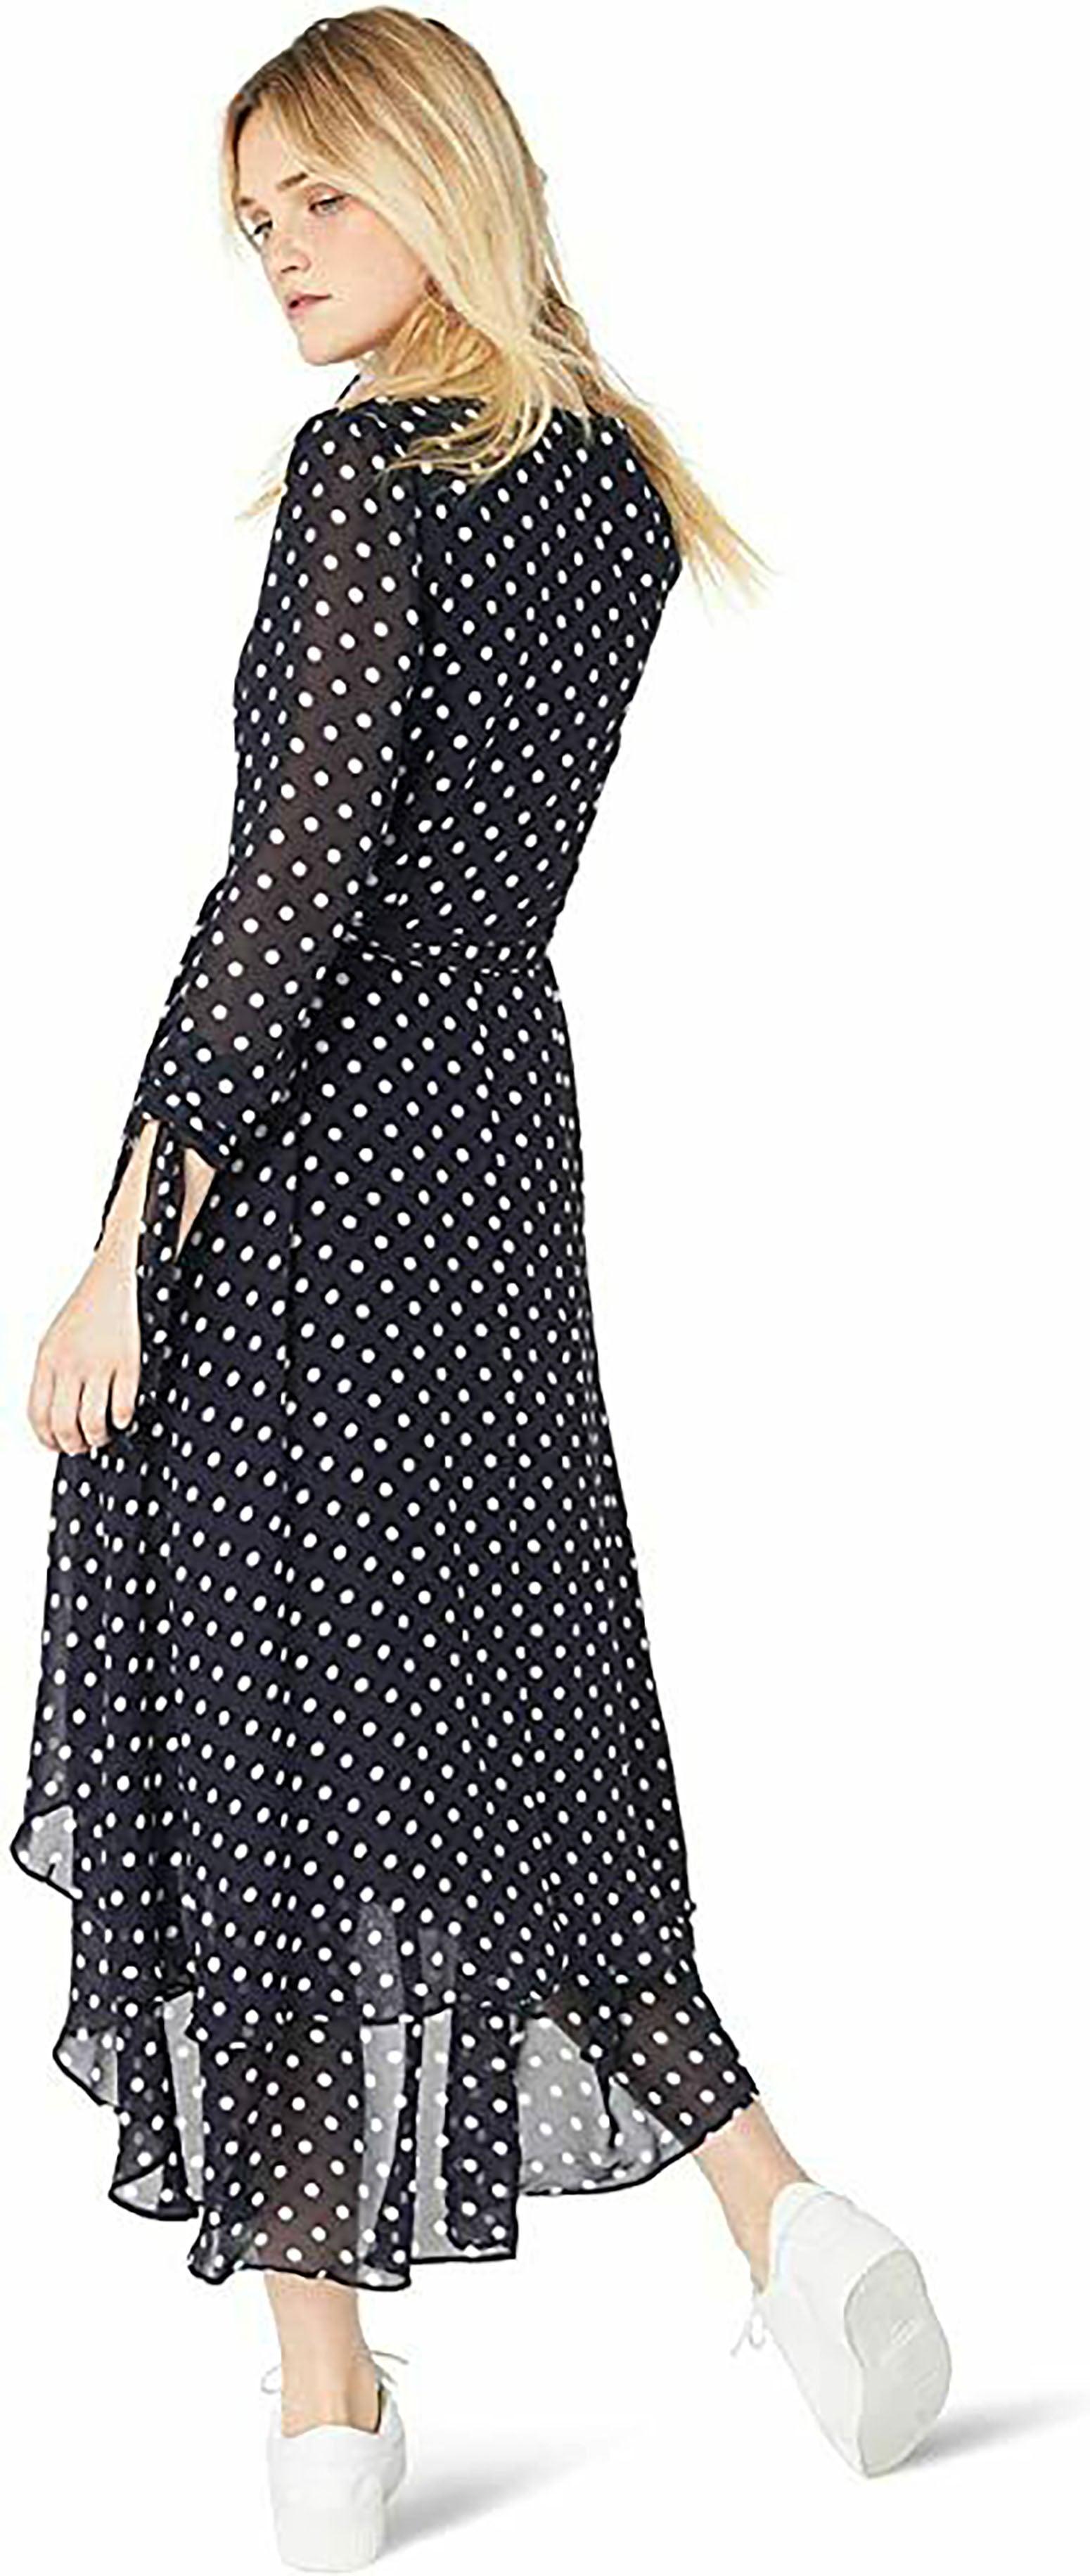 Betsey Johnson Women's Long Sleeve Polka Dot CRAZY FOR DOTS WRAP DRESS Navy 8 - SVNYFancy